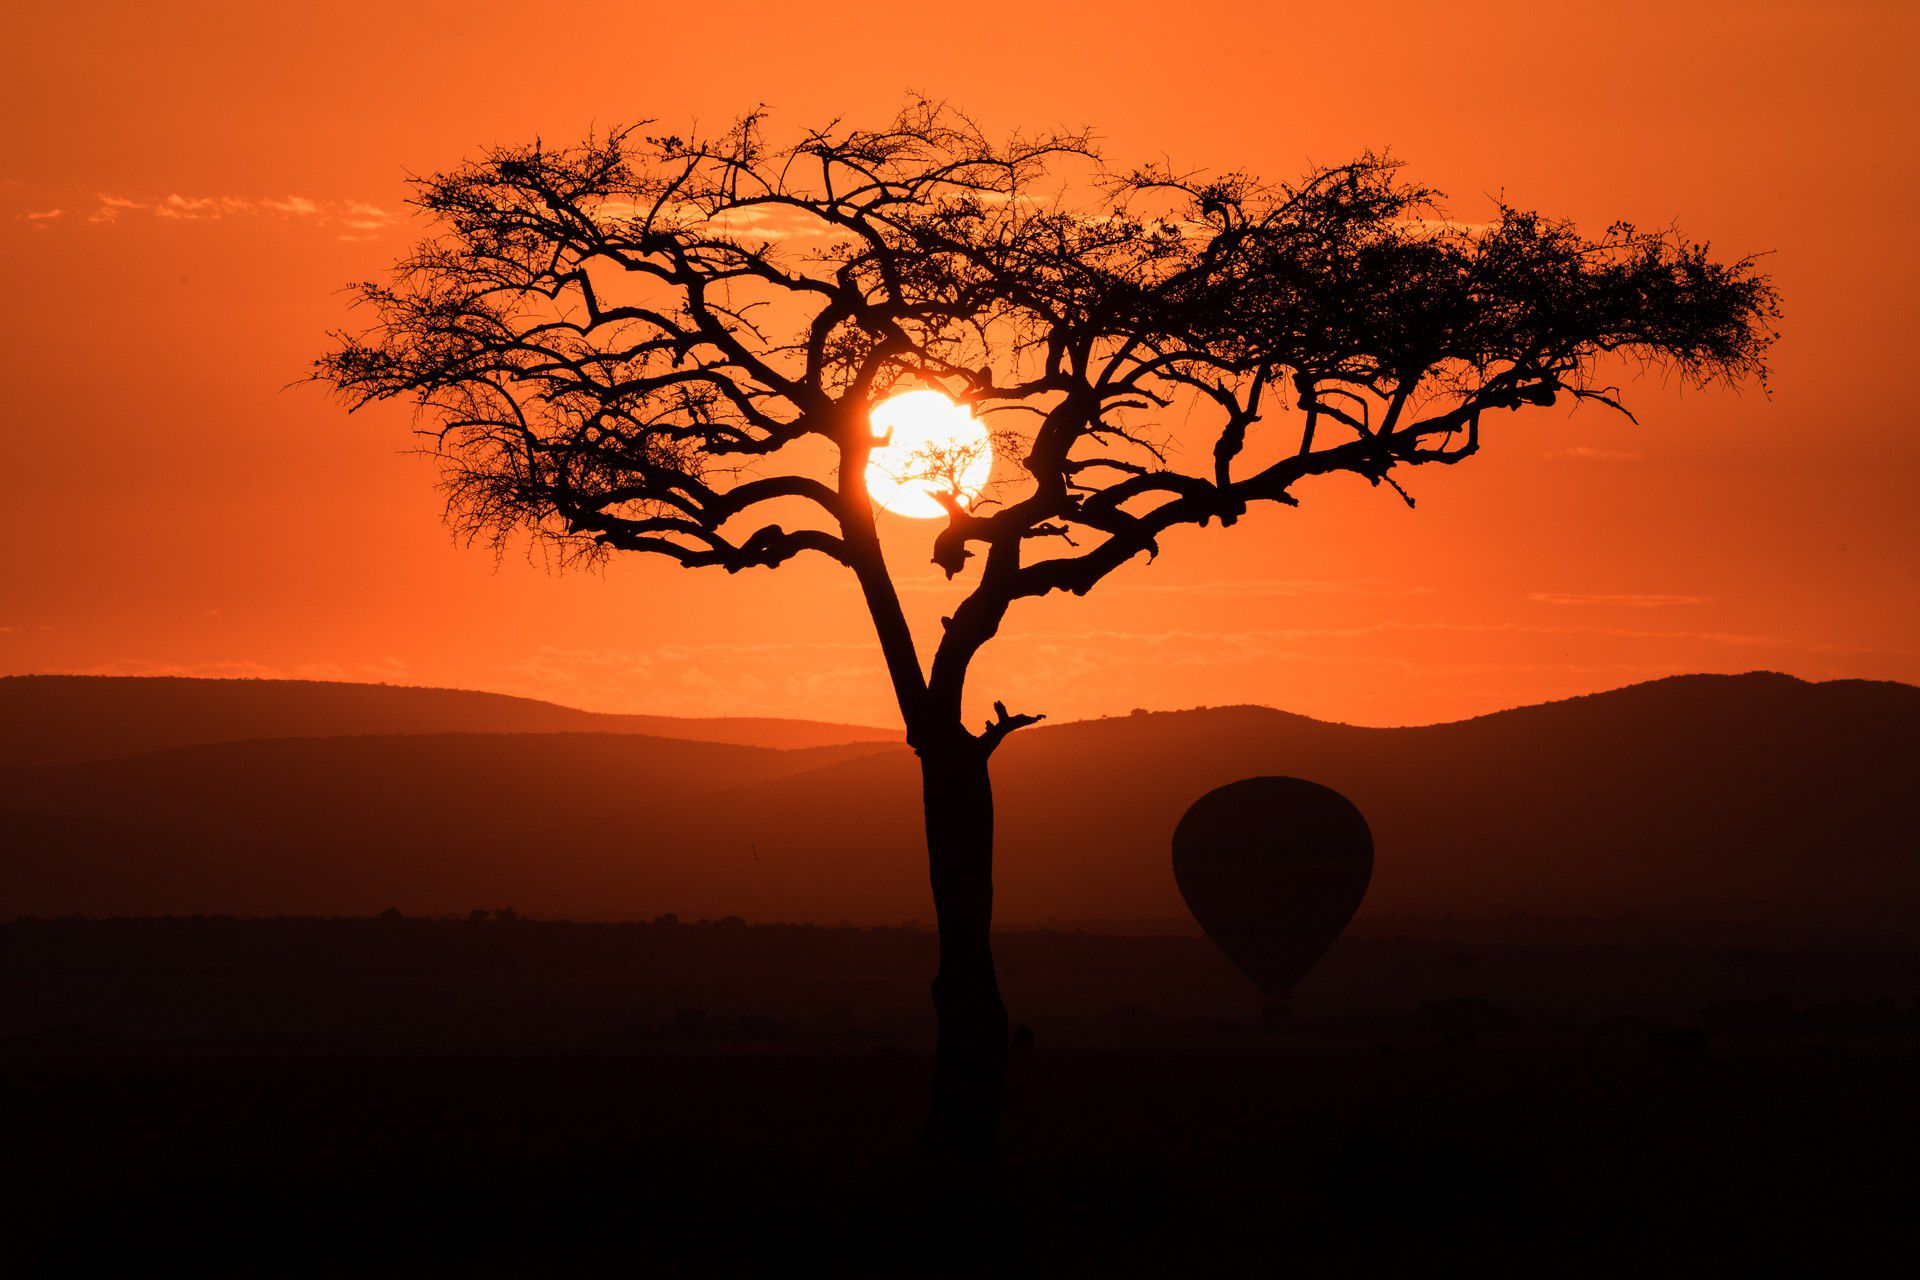 Tree at sunset in Masai Mara, Kenya. The East African Series photo album